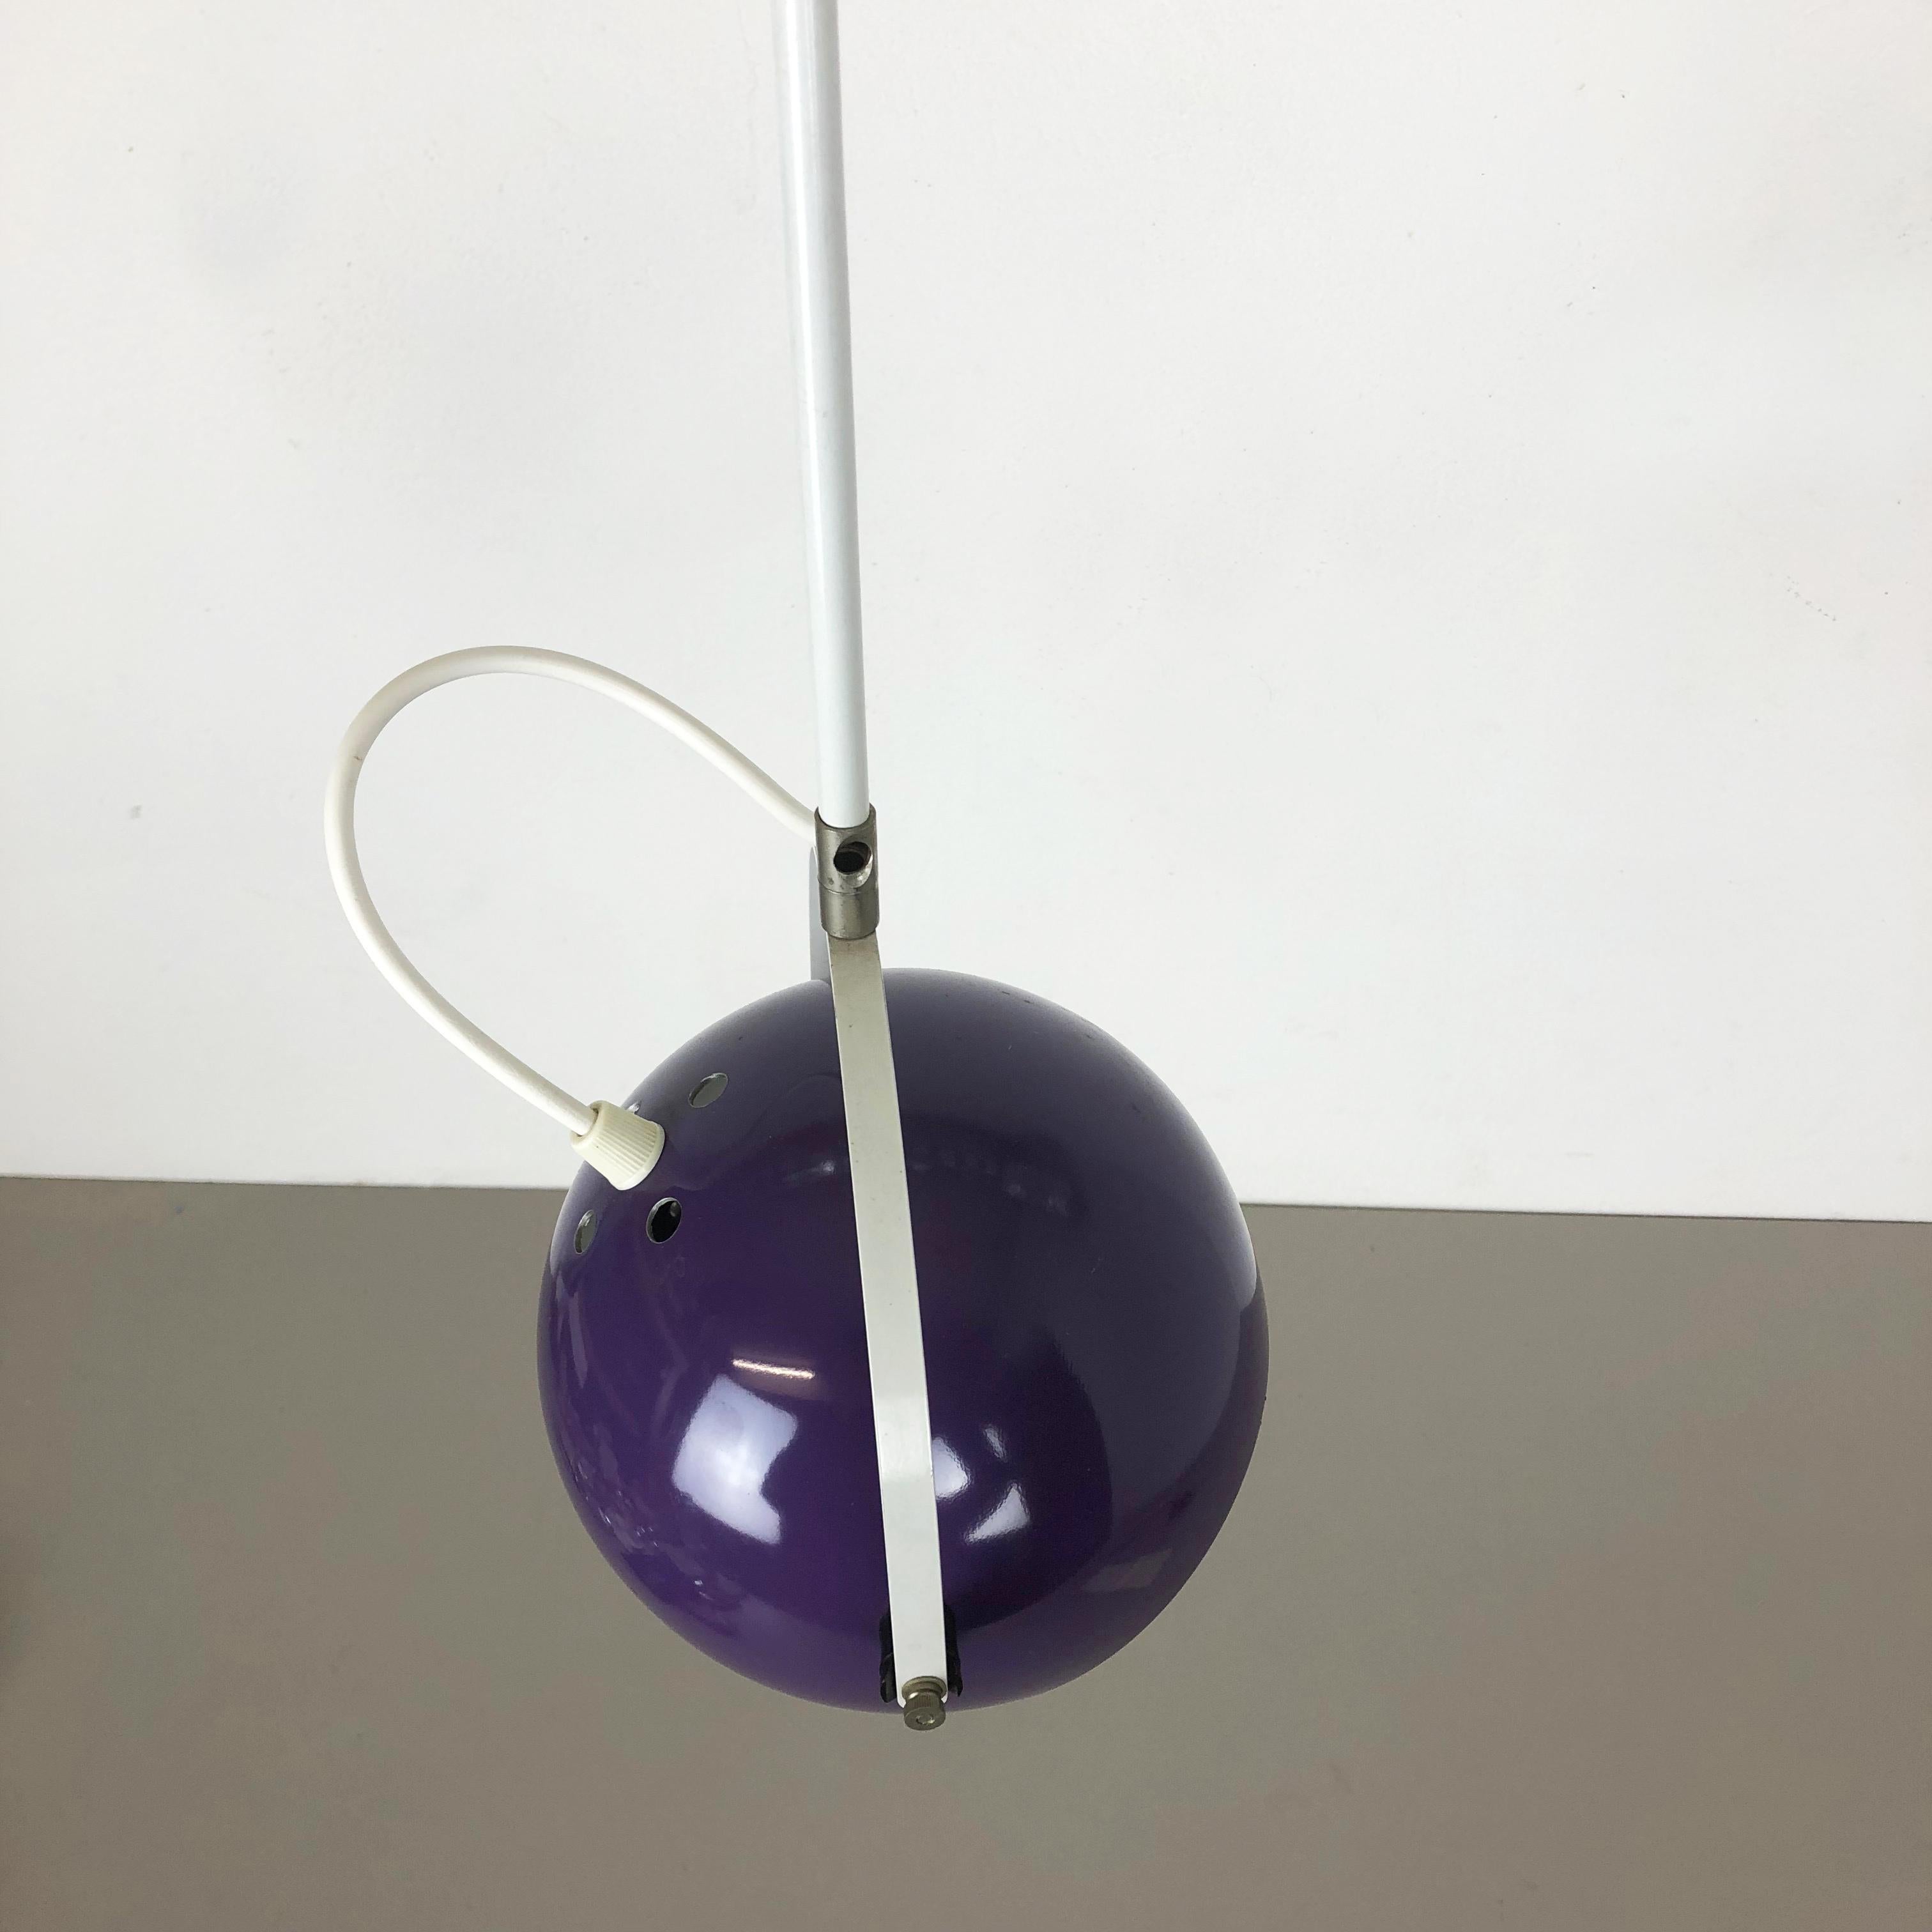 Metal Adjustable Pop Art Panton Style Hanging Light with Purple Spot, Germany, 1970s For Sale